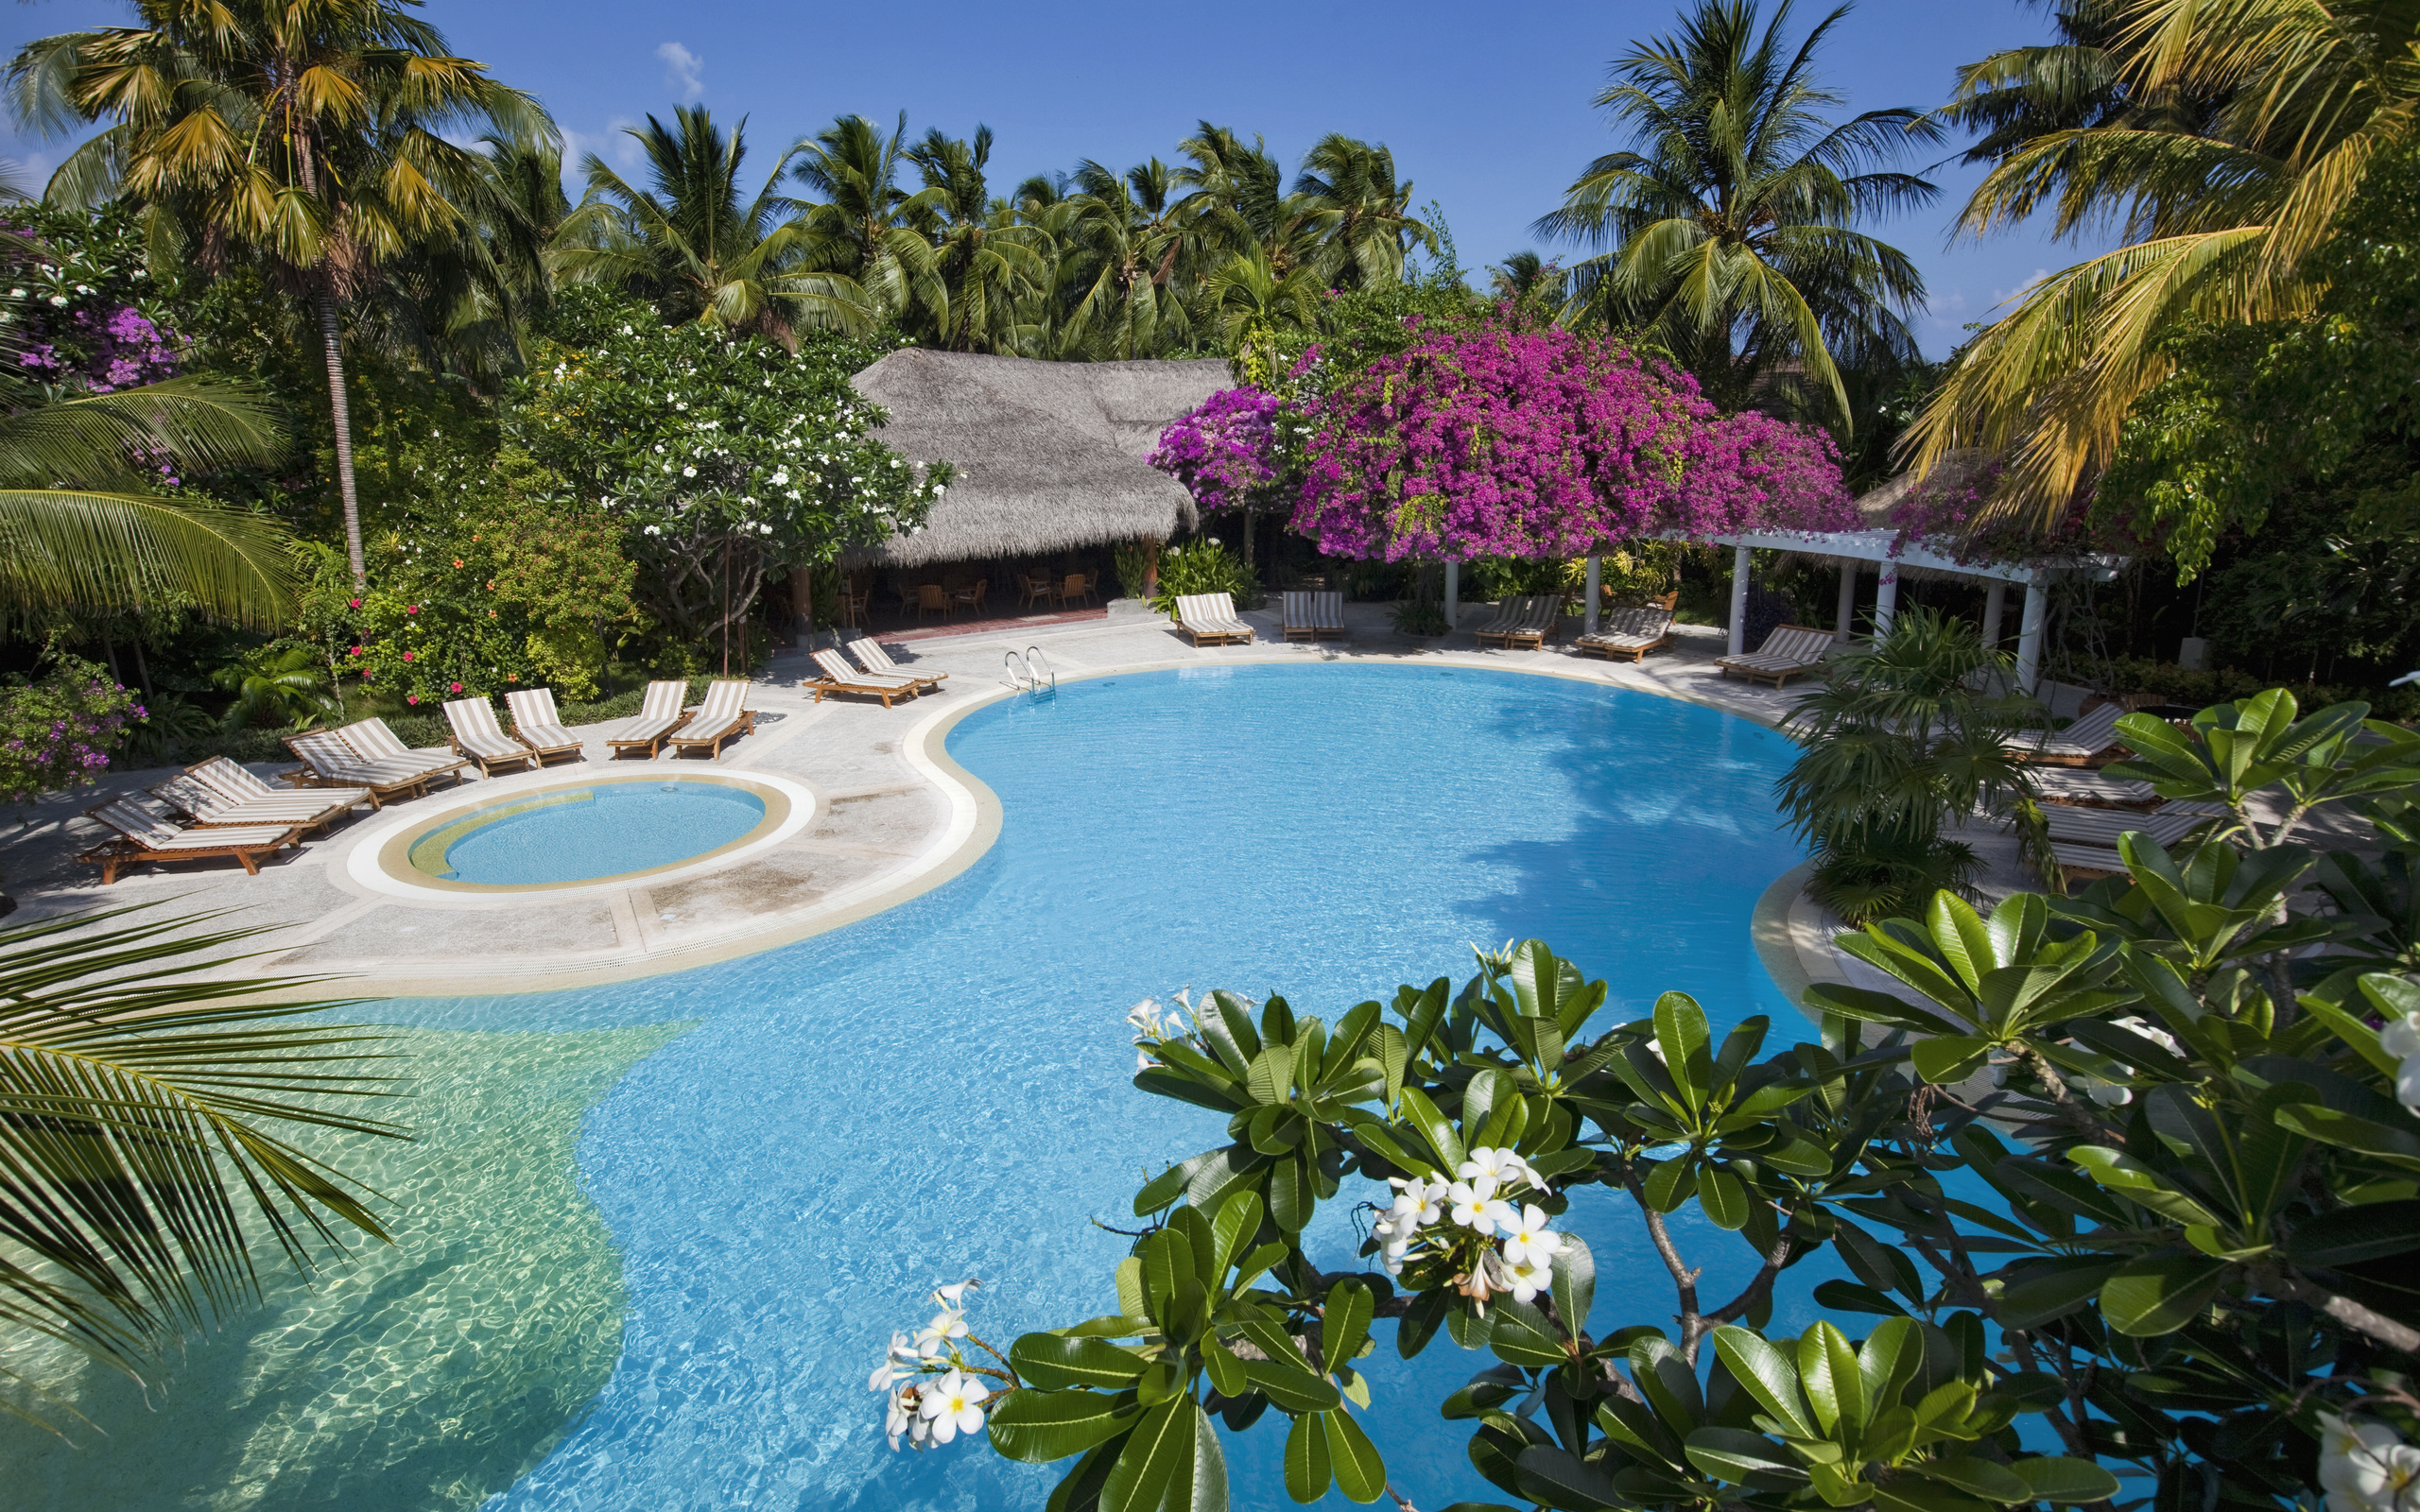 maldives, bungalow, pool, sunbeds, palms, trees